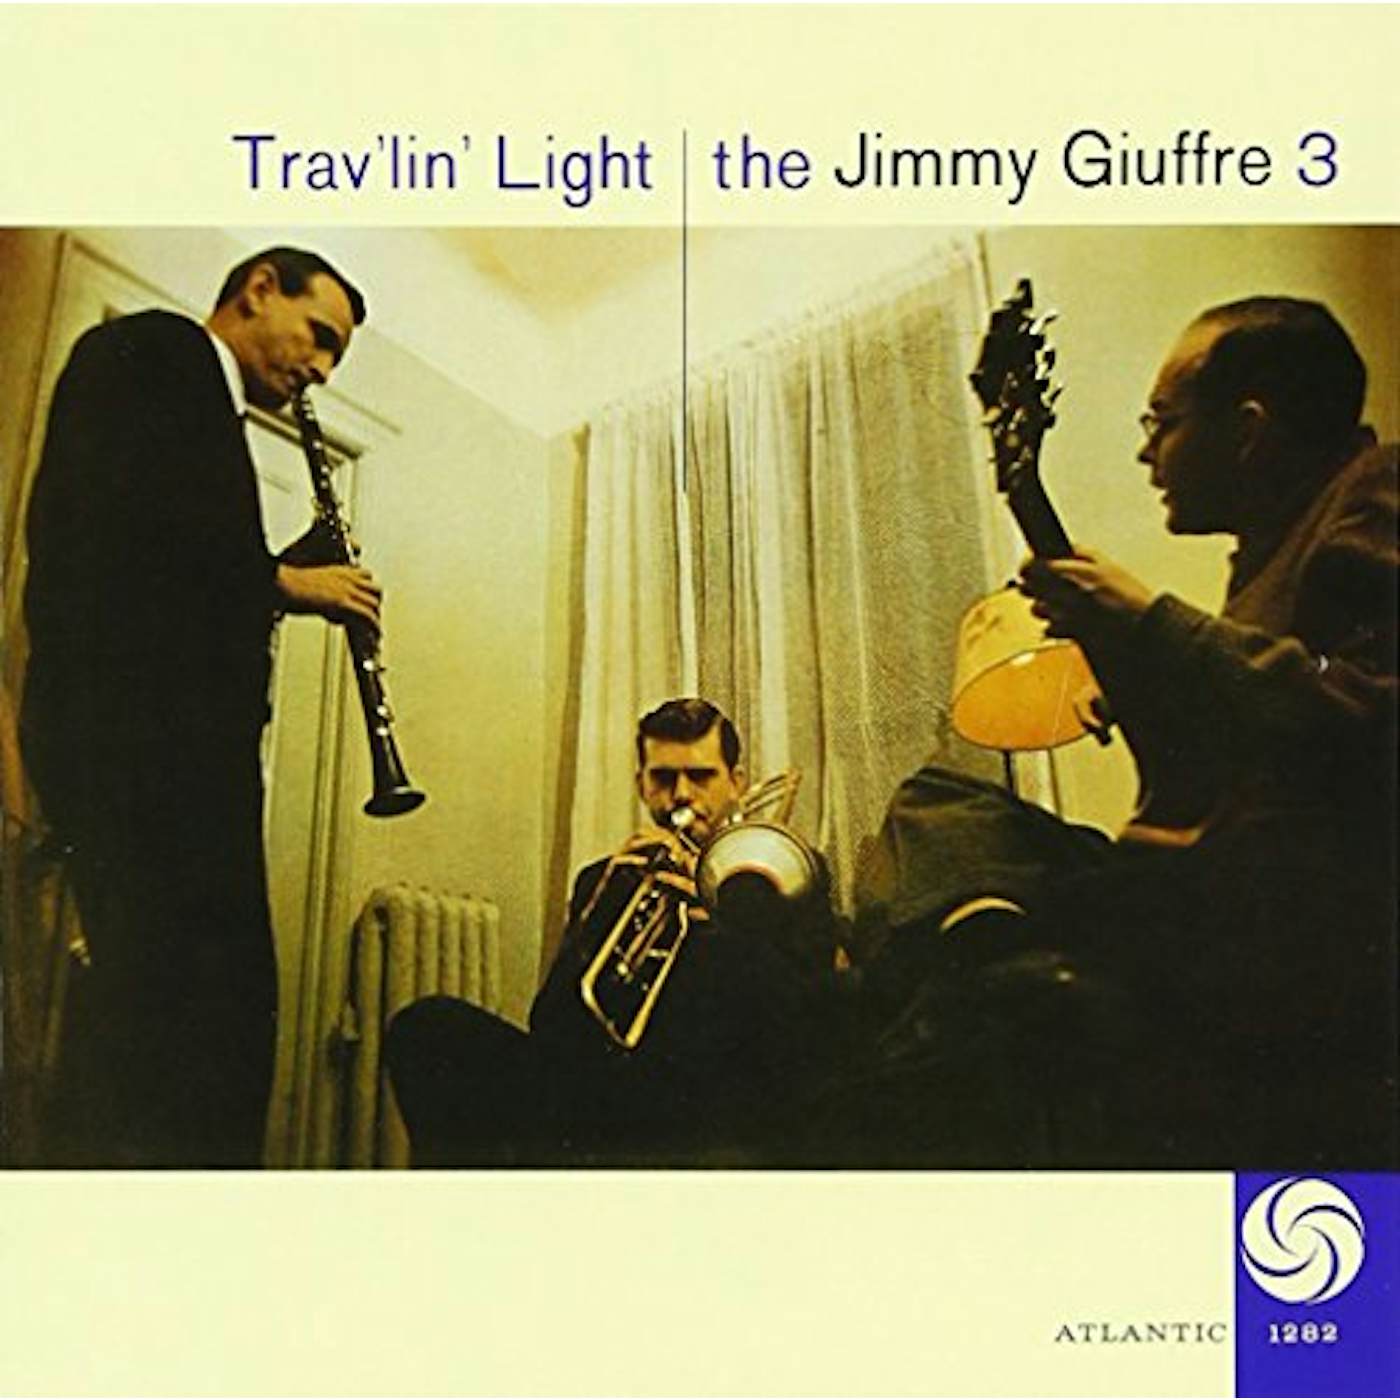 Jimmy Giuffre TRAV'LIN LIGHT CD